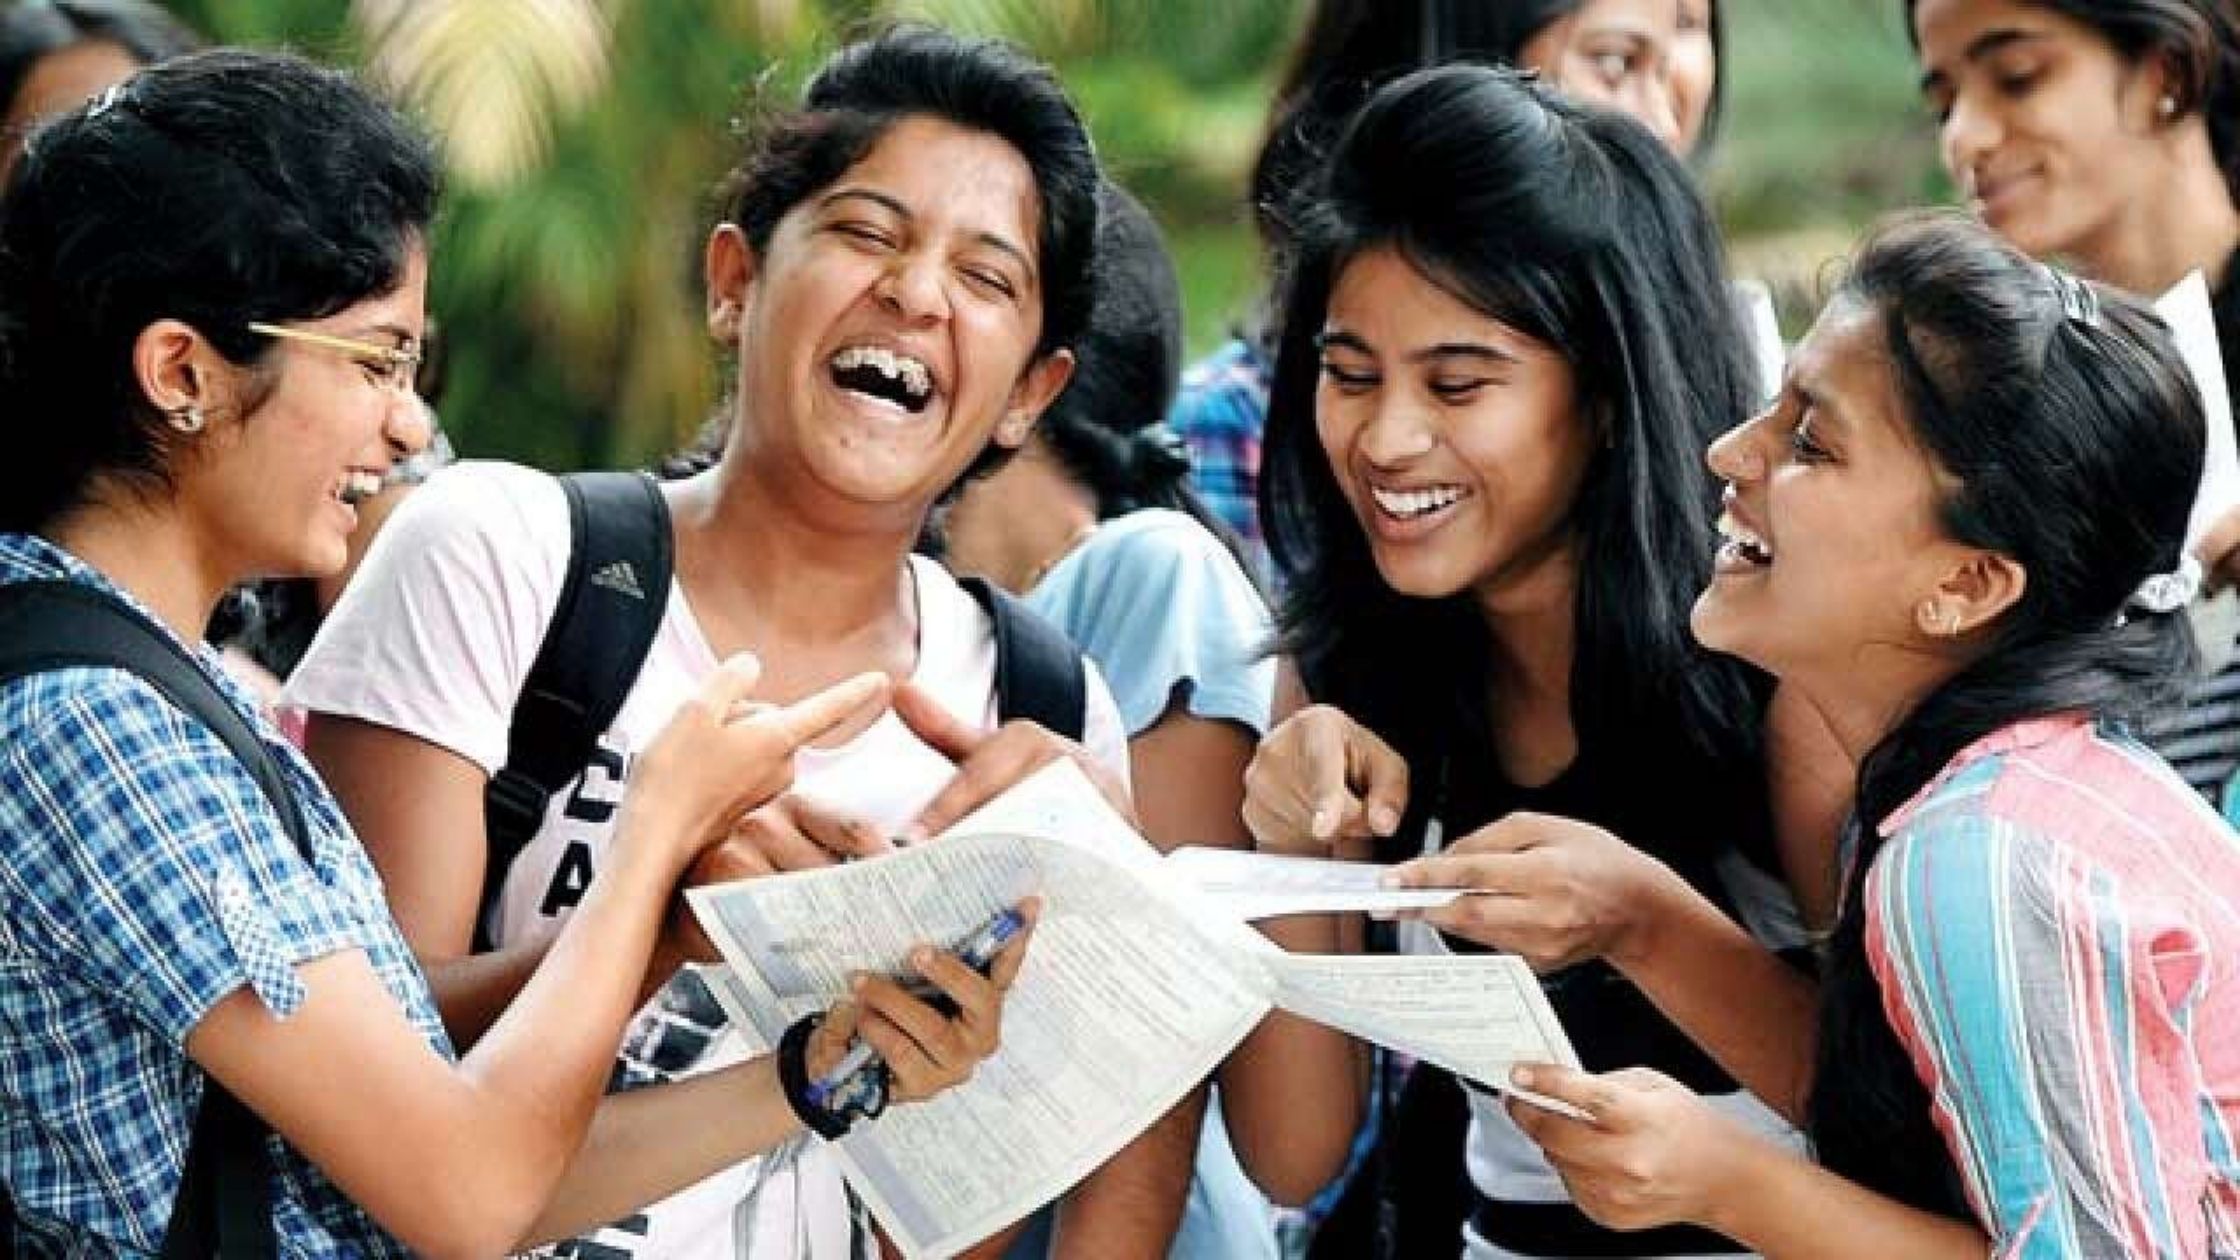 University gave 555 marks in 100 marks exam